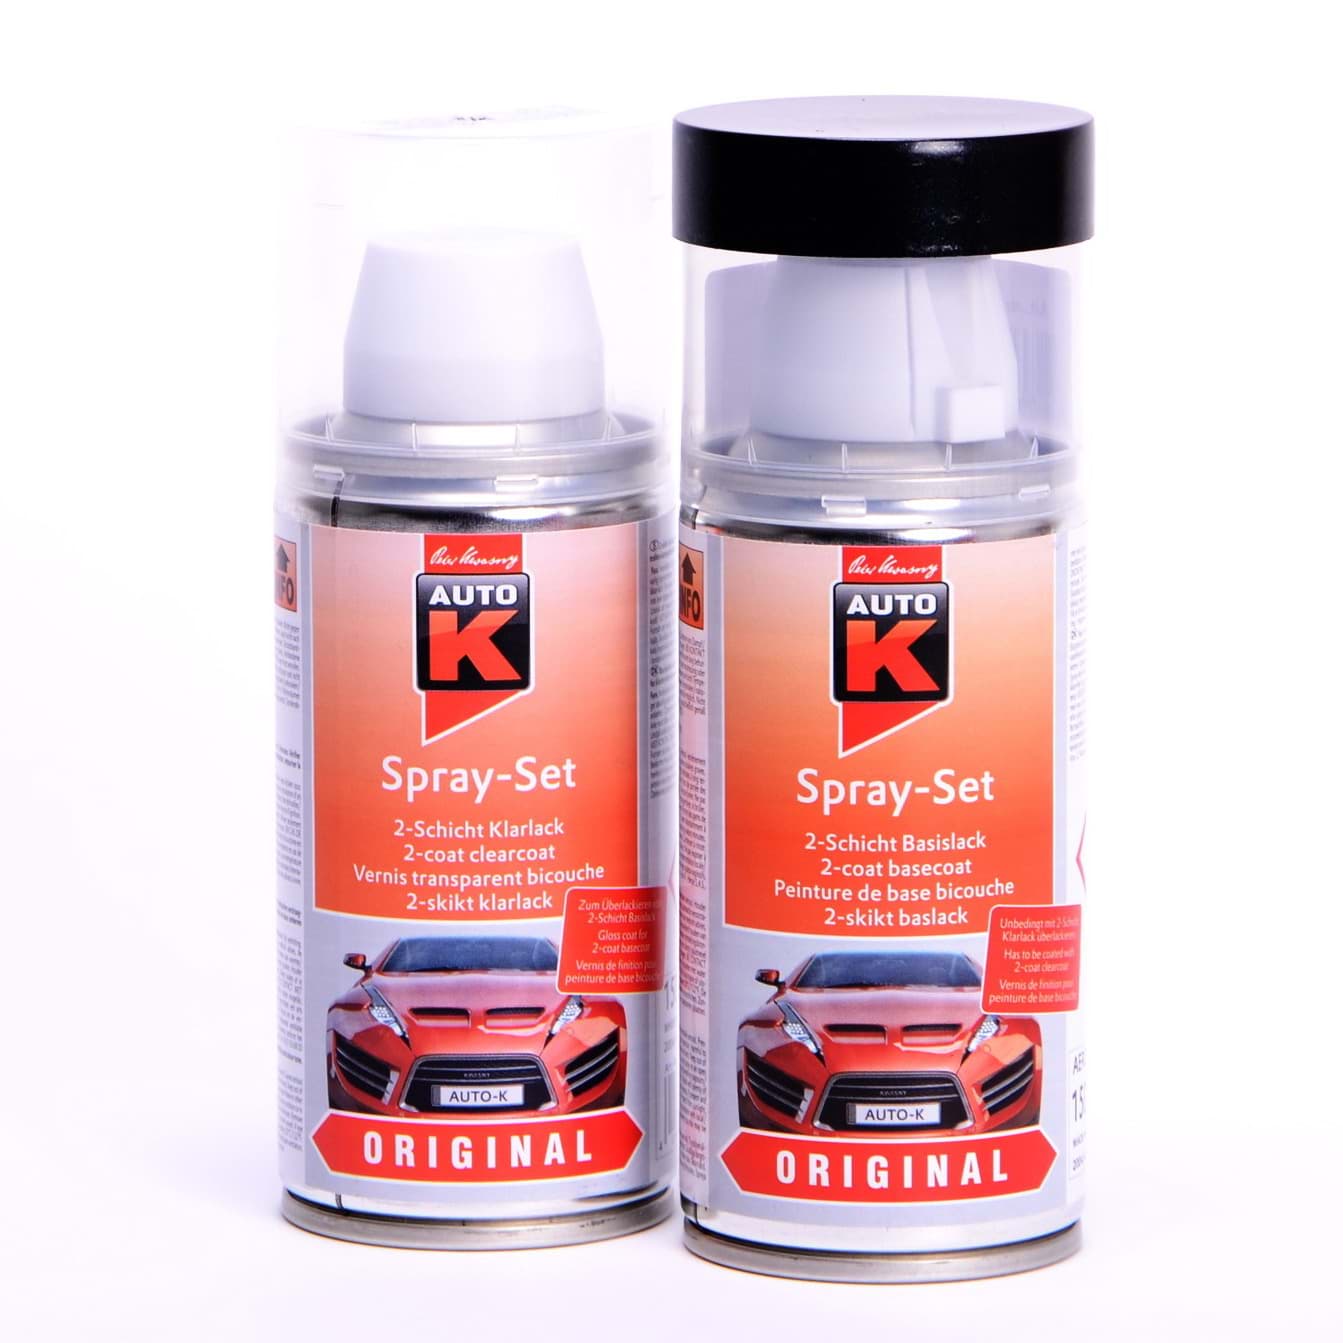 Auto-K Spray-Set Autolack für Opel 291 Ardenblau met 21439 resmi